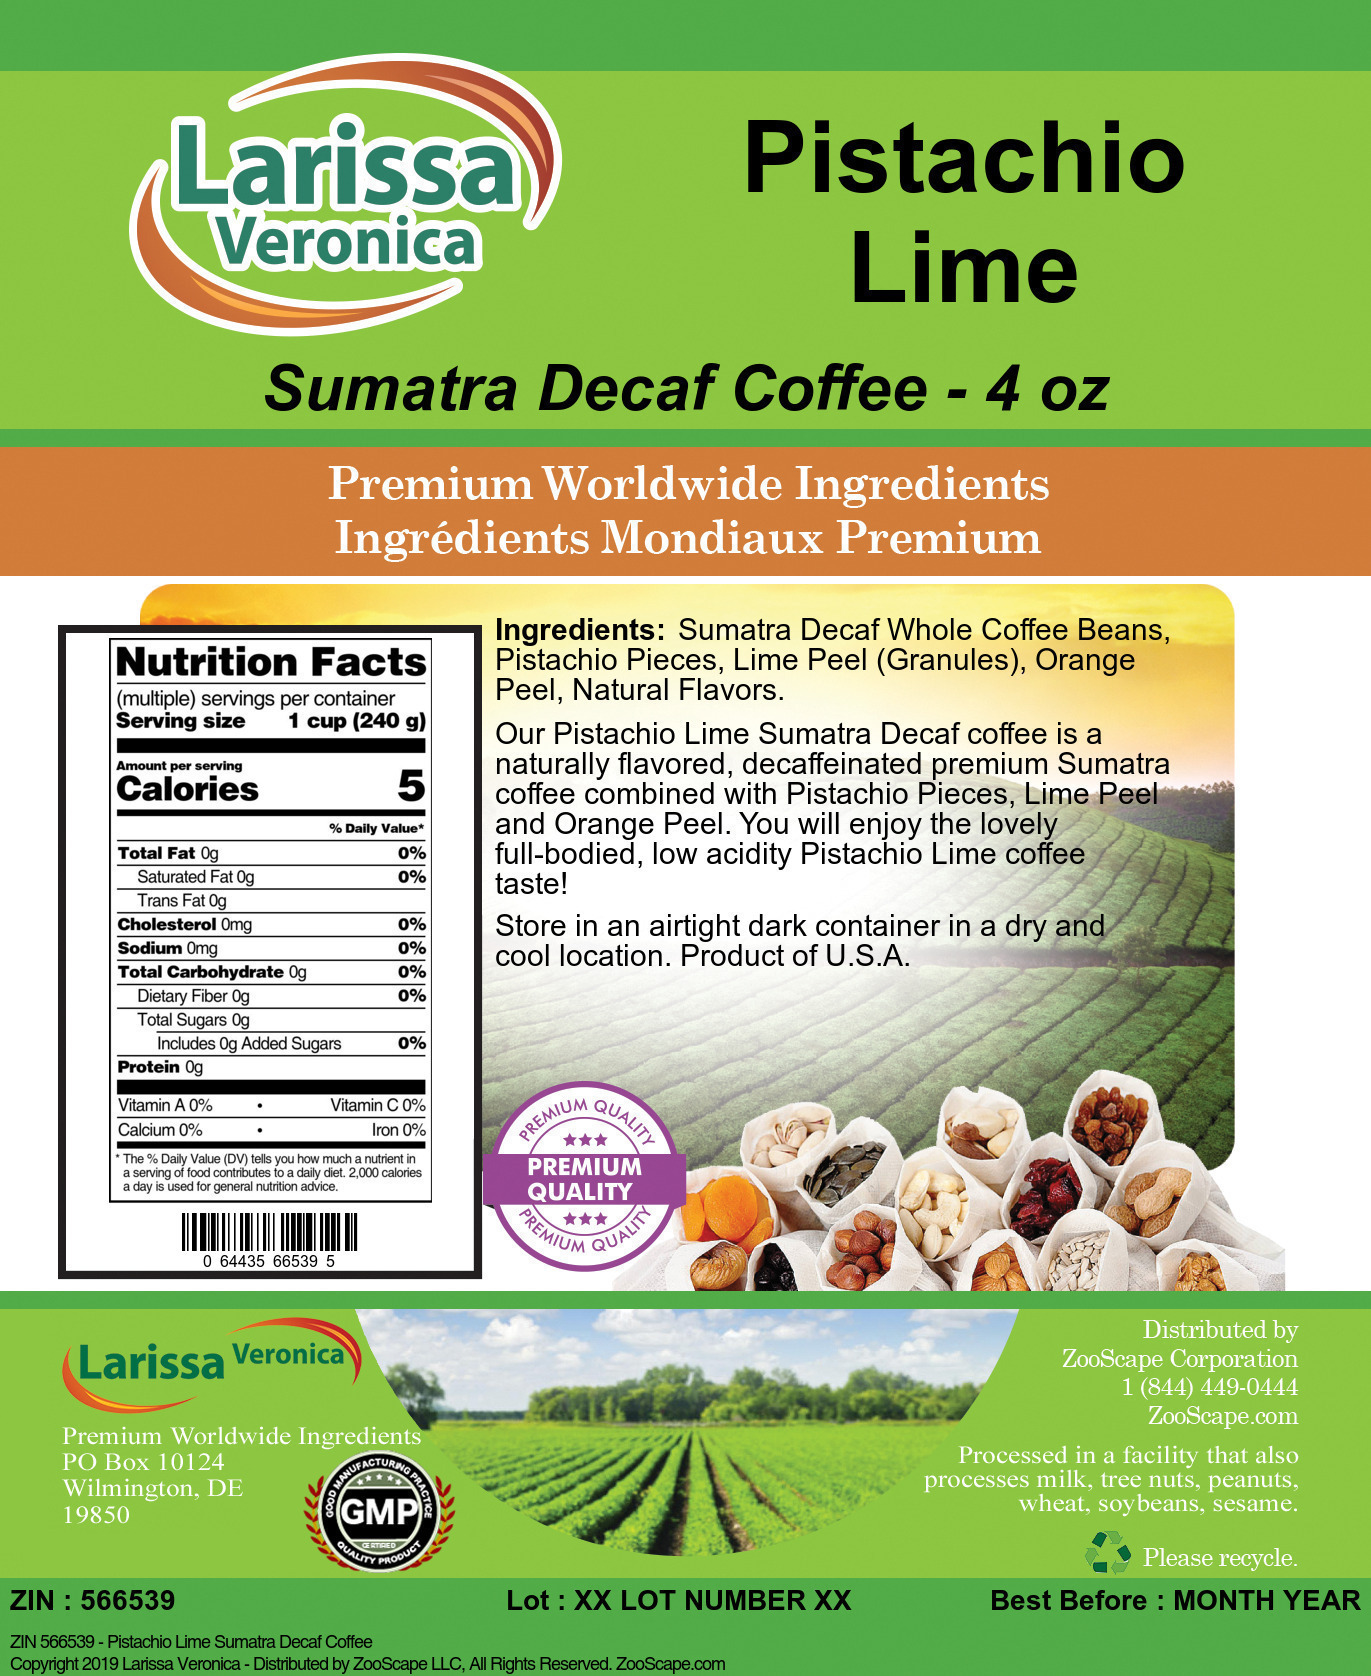 Pistachio Lime Sumatra Decaf Coffee - Label